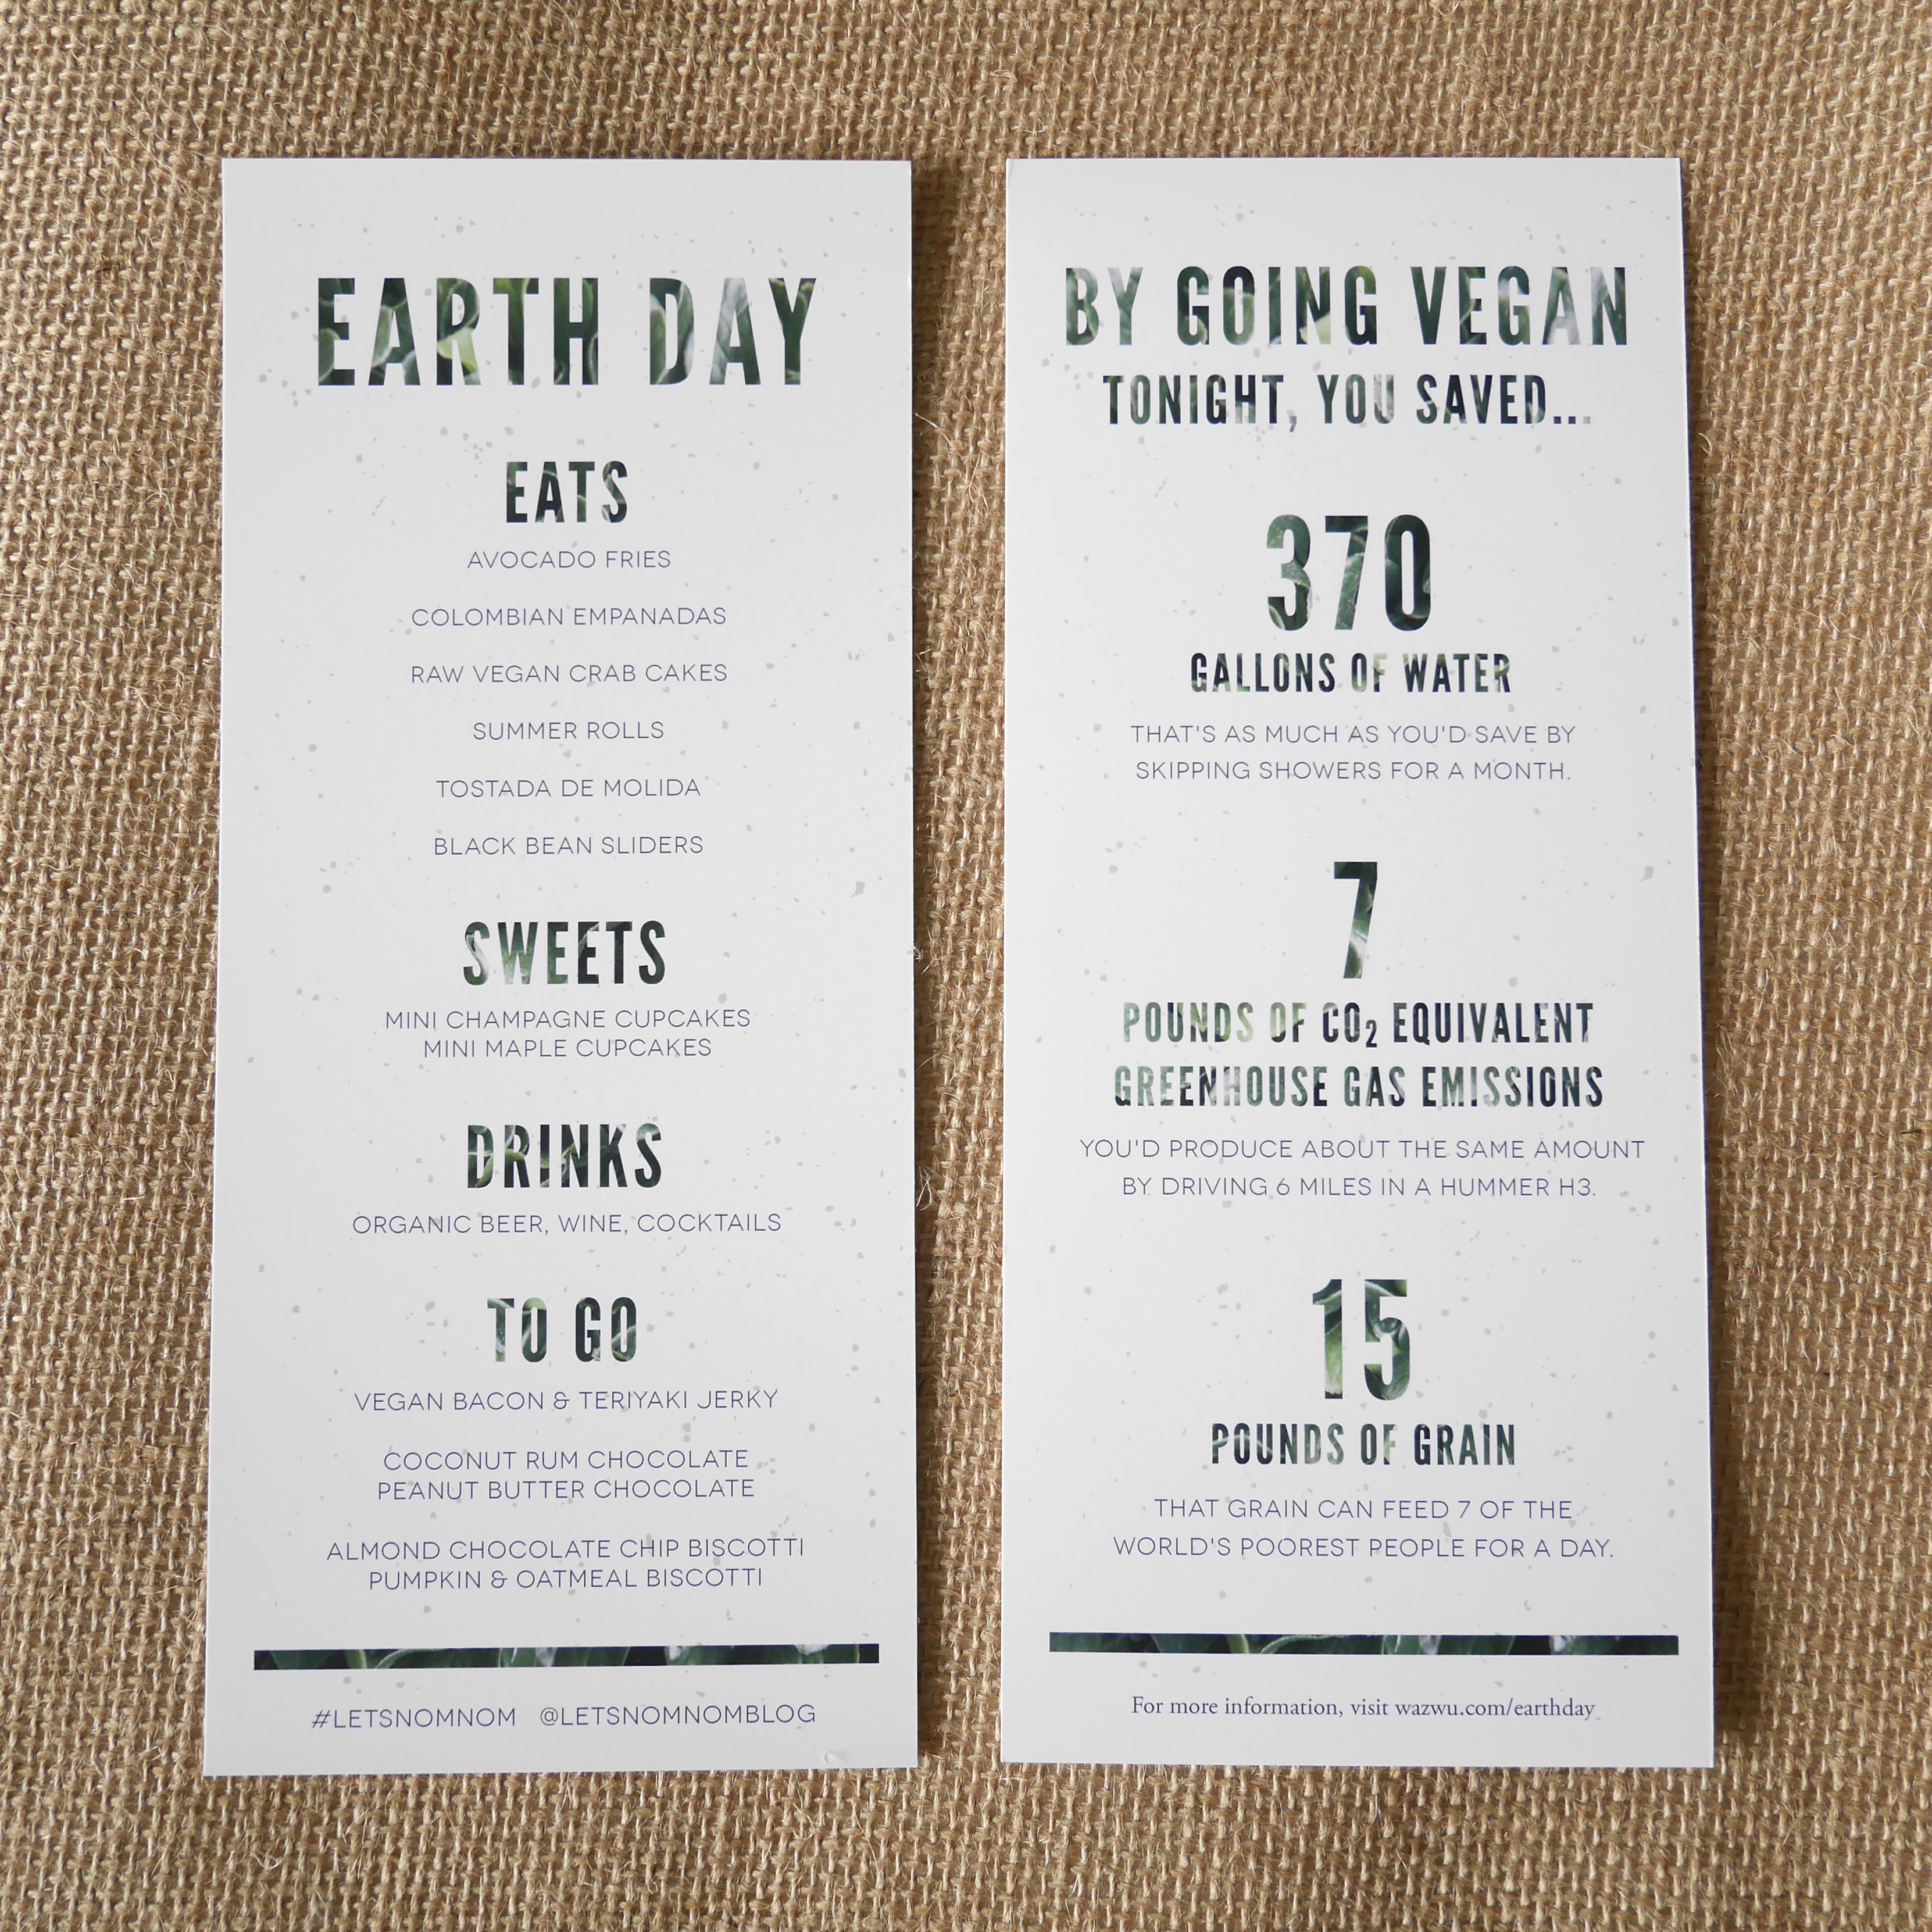 Earth Day Vegan Eats, V-Spot